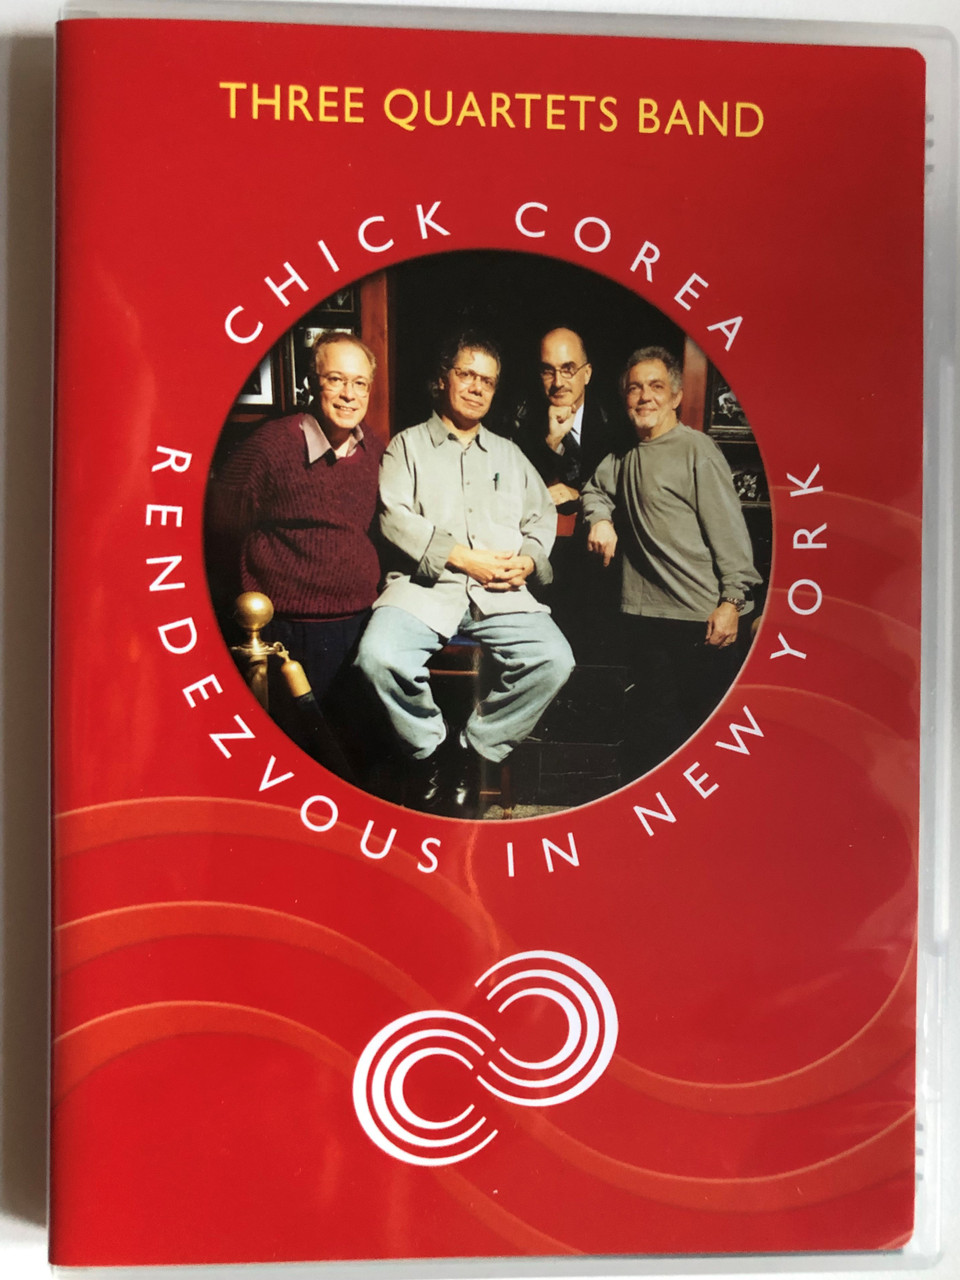 Three Quartets Band - Chick Corea - Rendezvous In New York / Image  Entertainment DVD Video CD / ID1250IEDVD - bibleinmylanguage